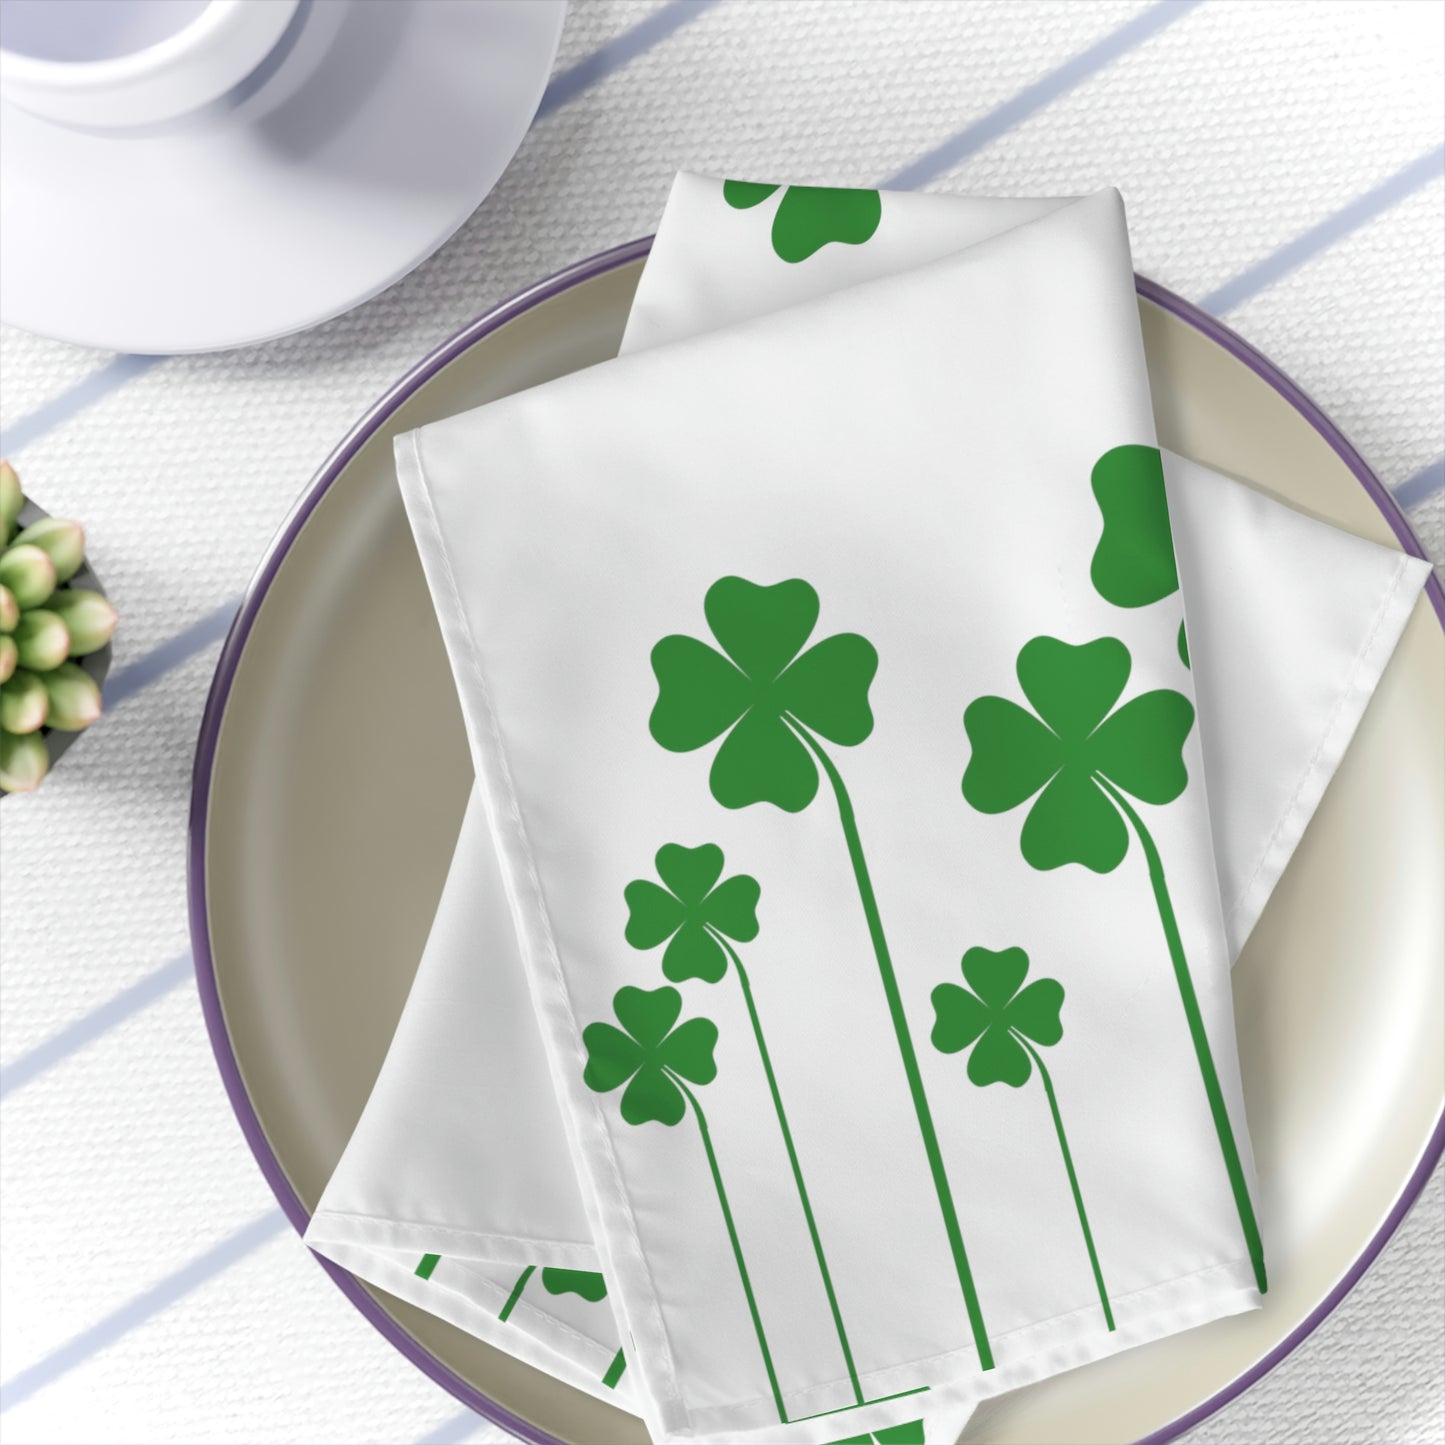 St patricks day cloth napkins with green shamrocks